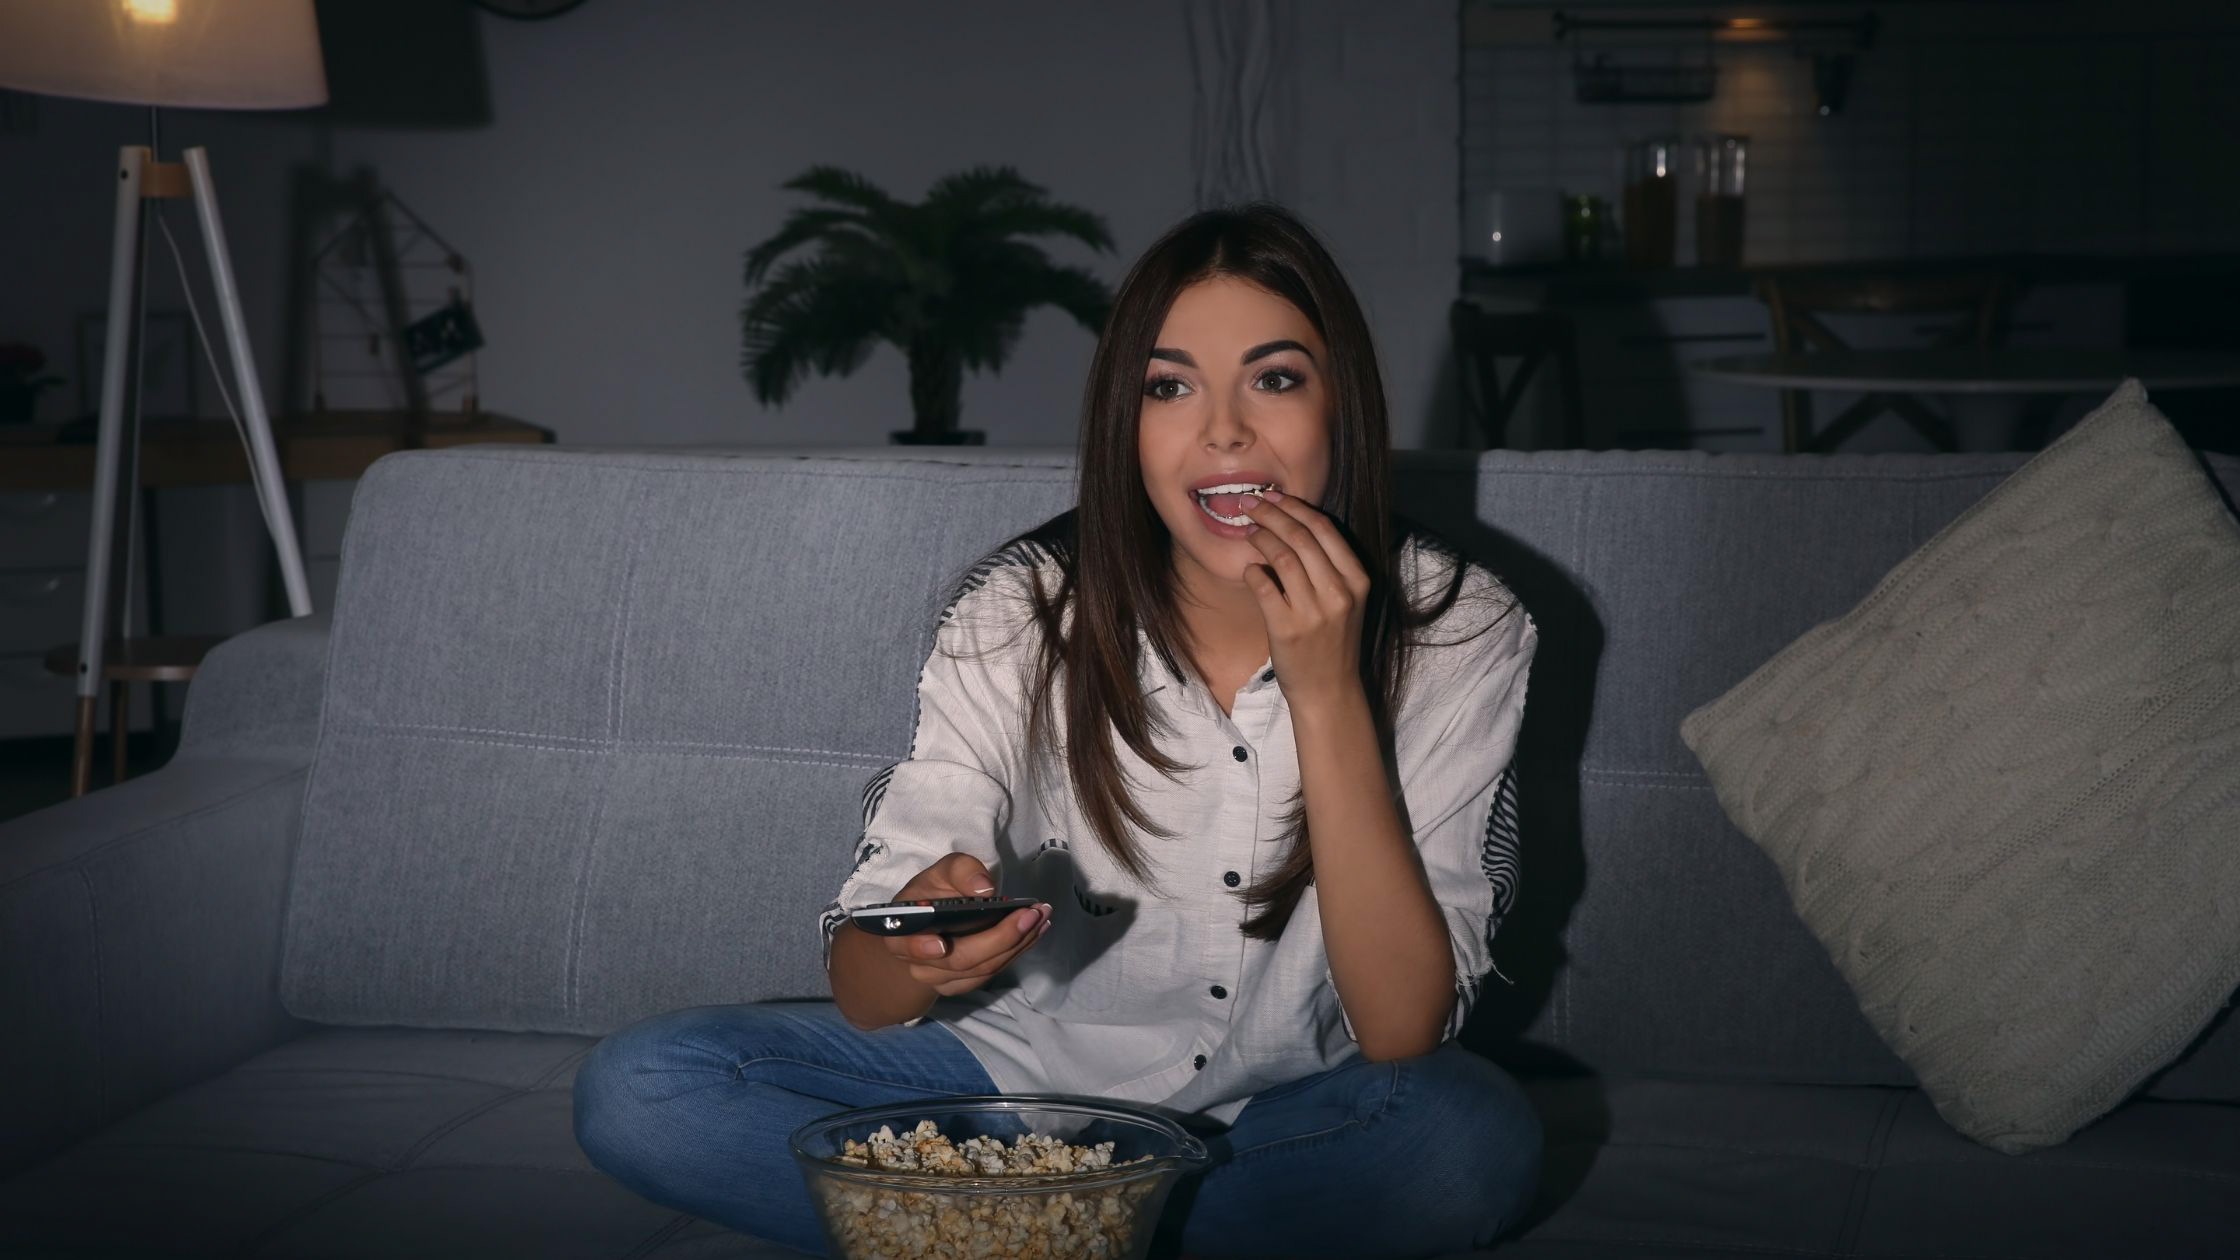 woman eating popcorn while watching TV